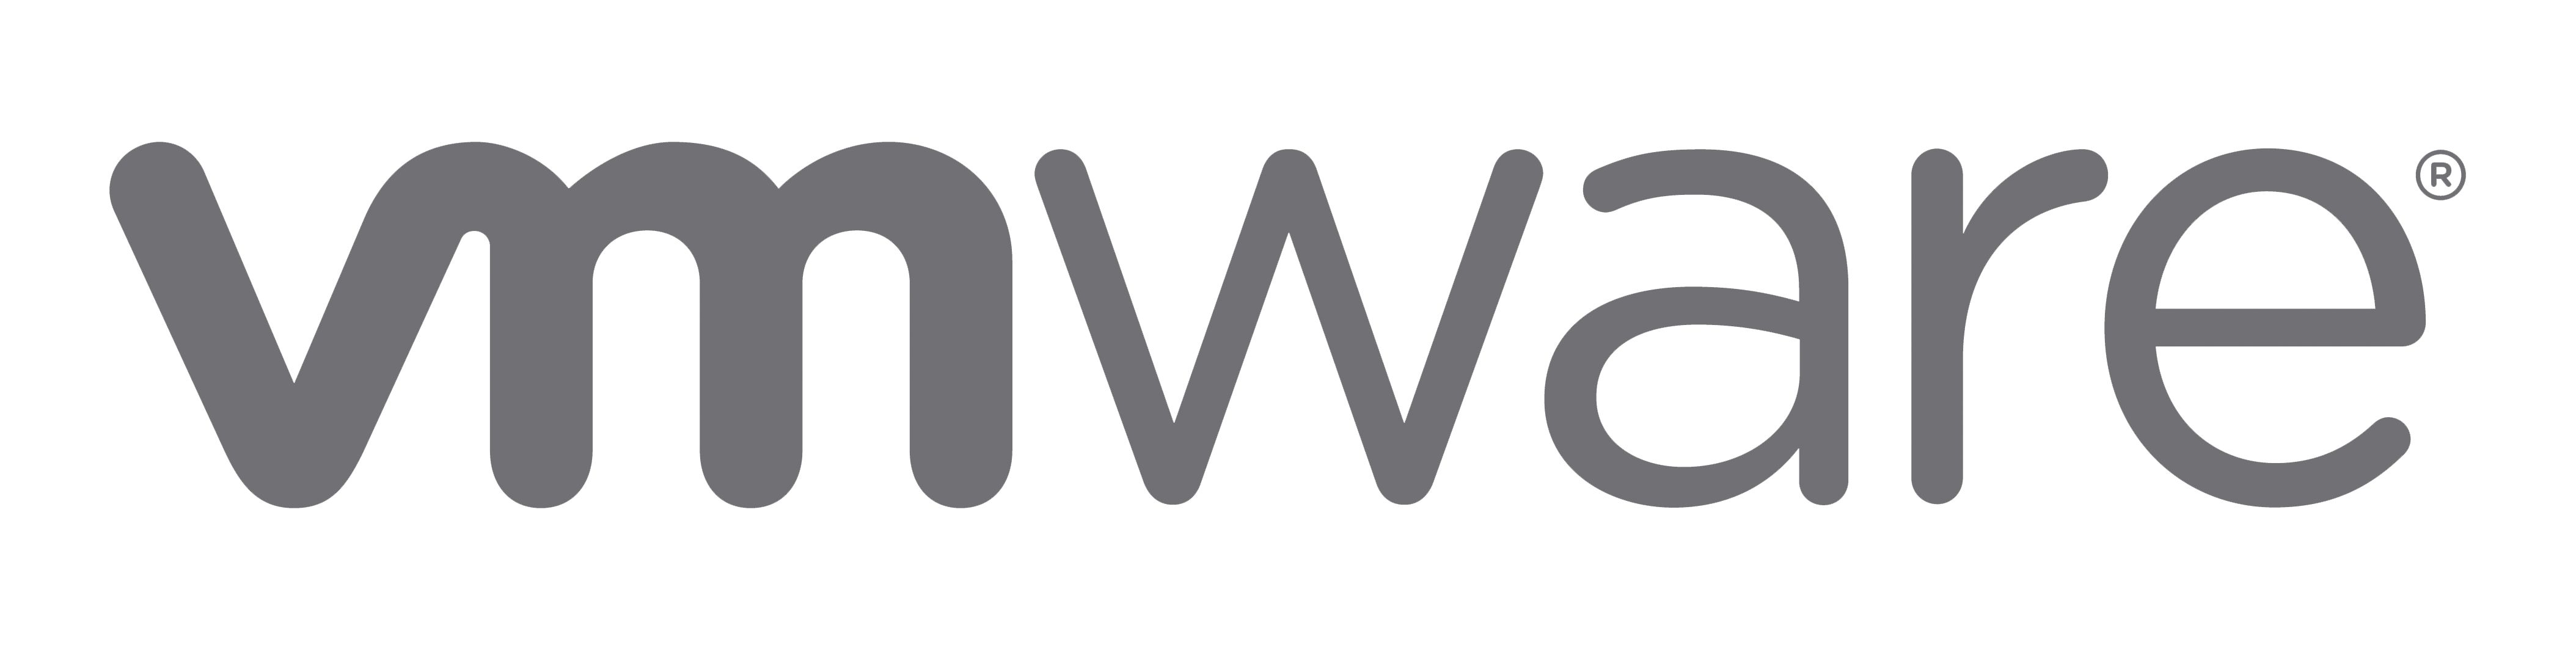 VMware-logo.jpg